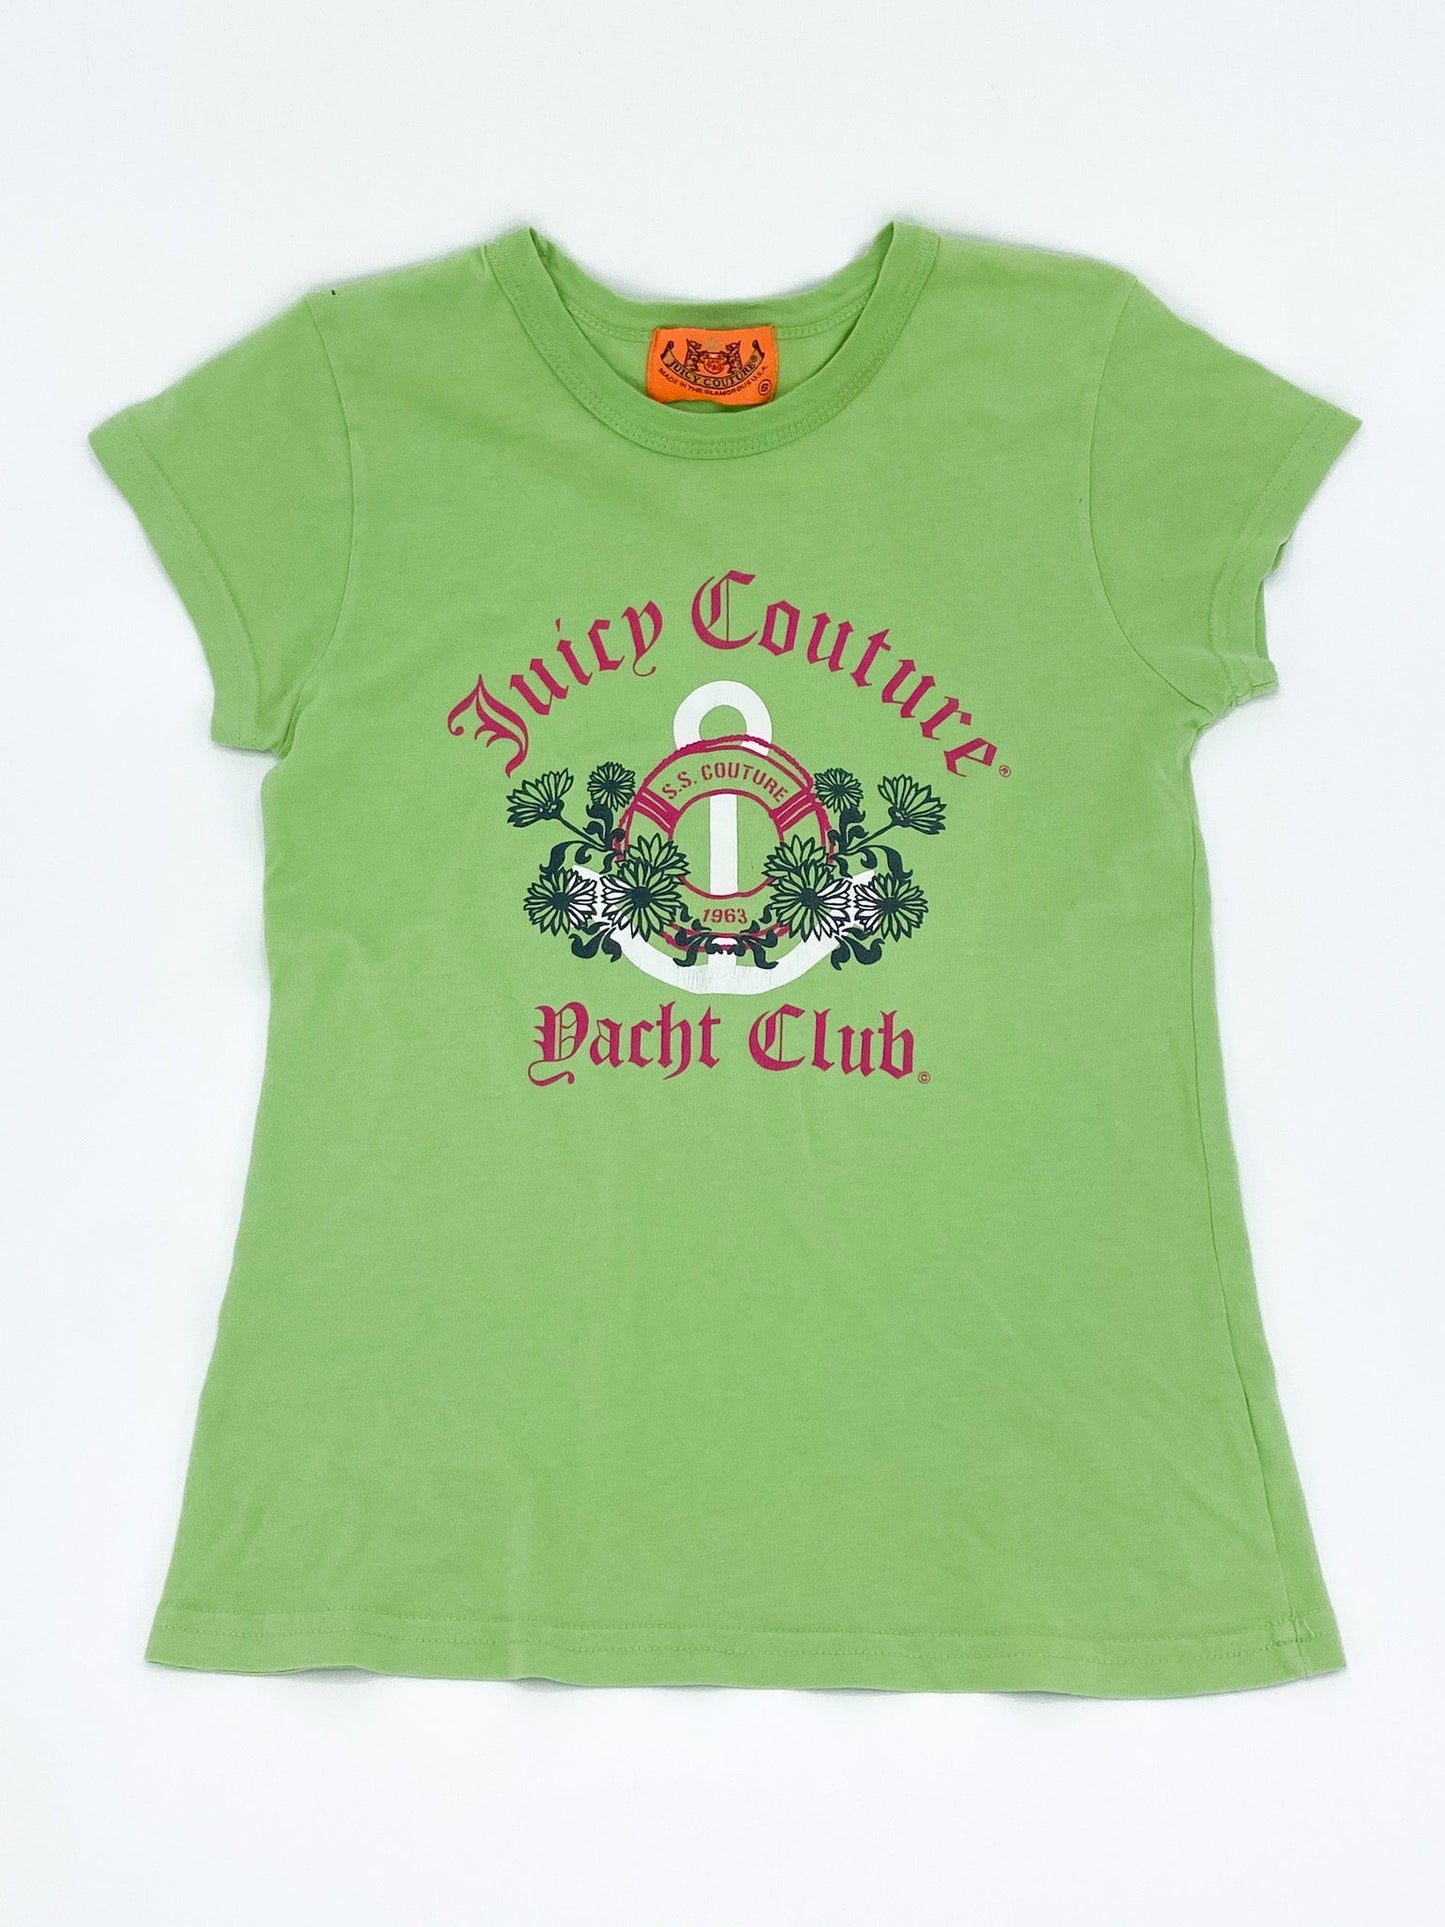 Vintage 00's Green Juicy Couture Top - M - Playground Vintage